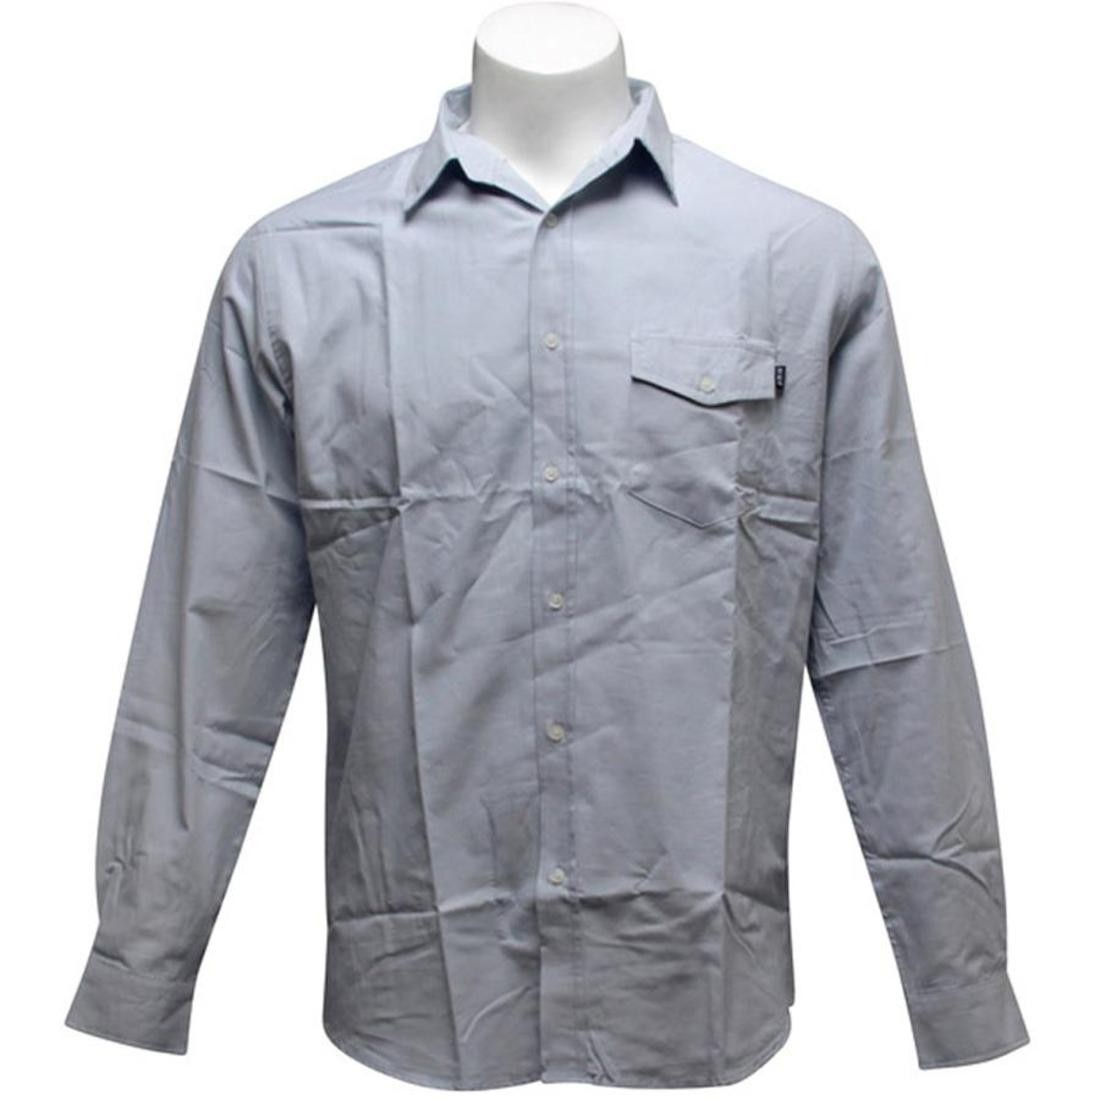 HUF Pocket Oxford Woven Shirt (powder blue)